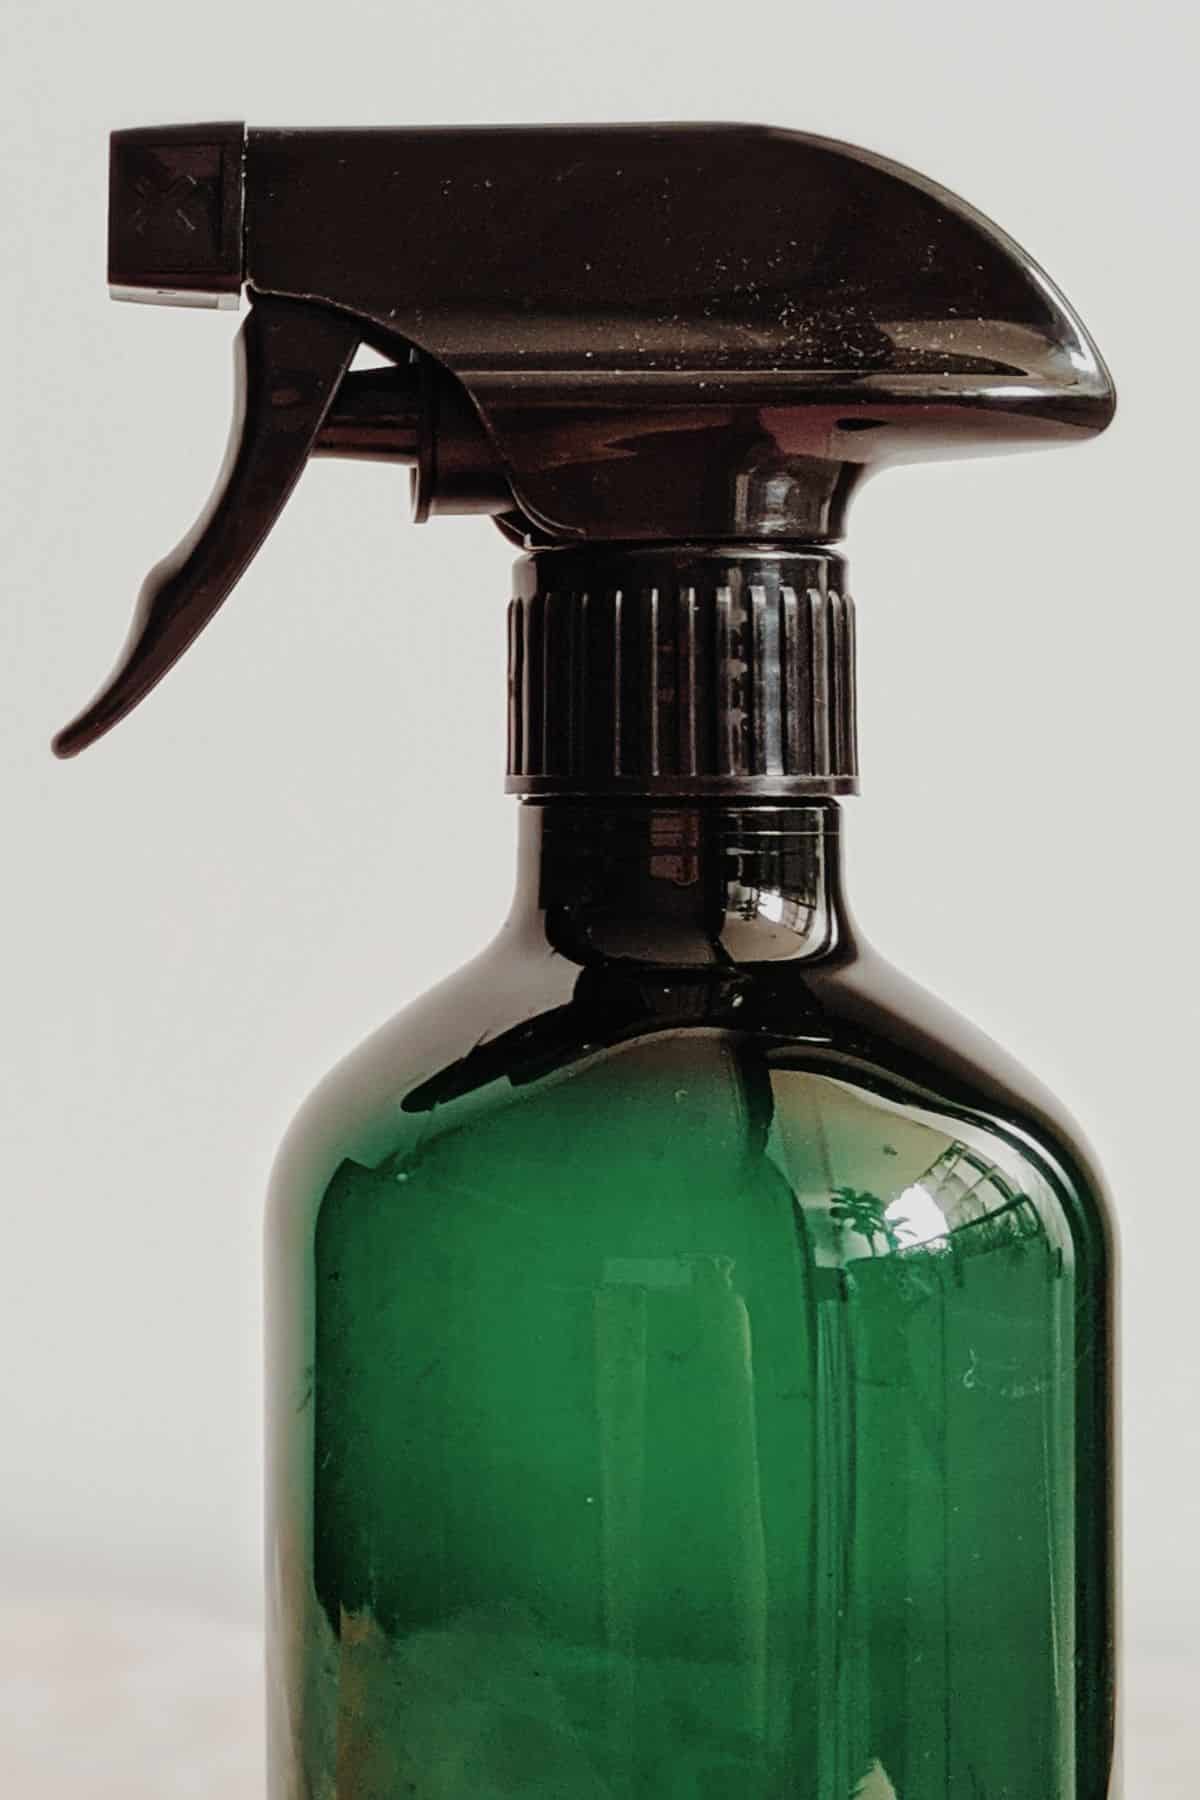 a green spray bottle.